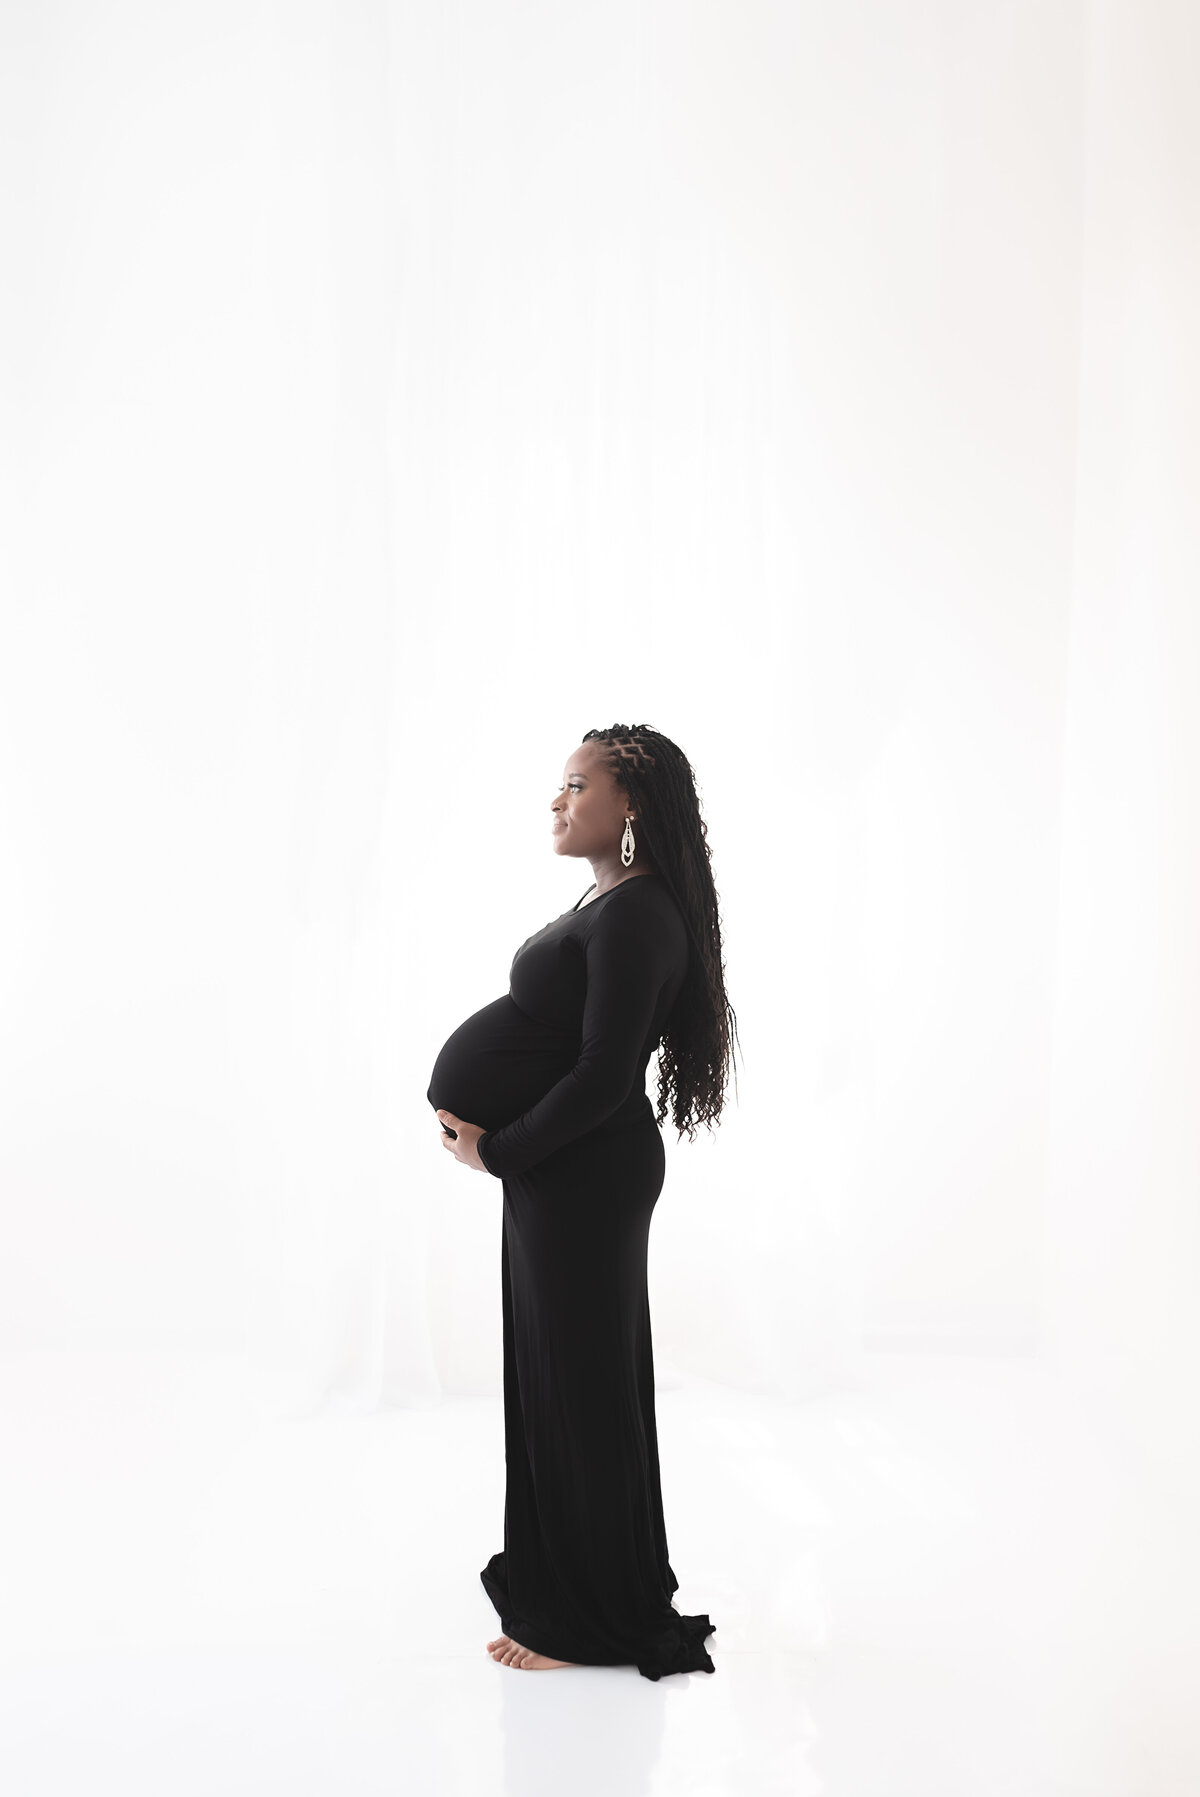 2023 Maternity Portraits | Victoria Nwokorie-5069